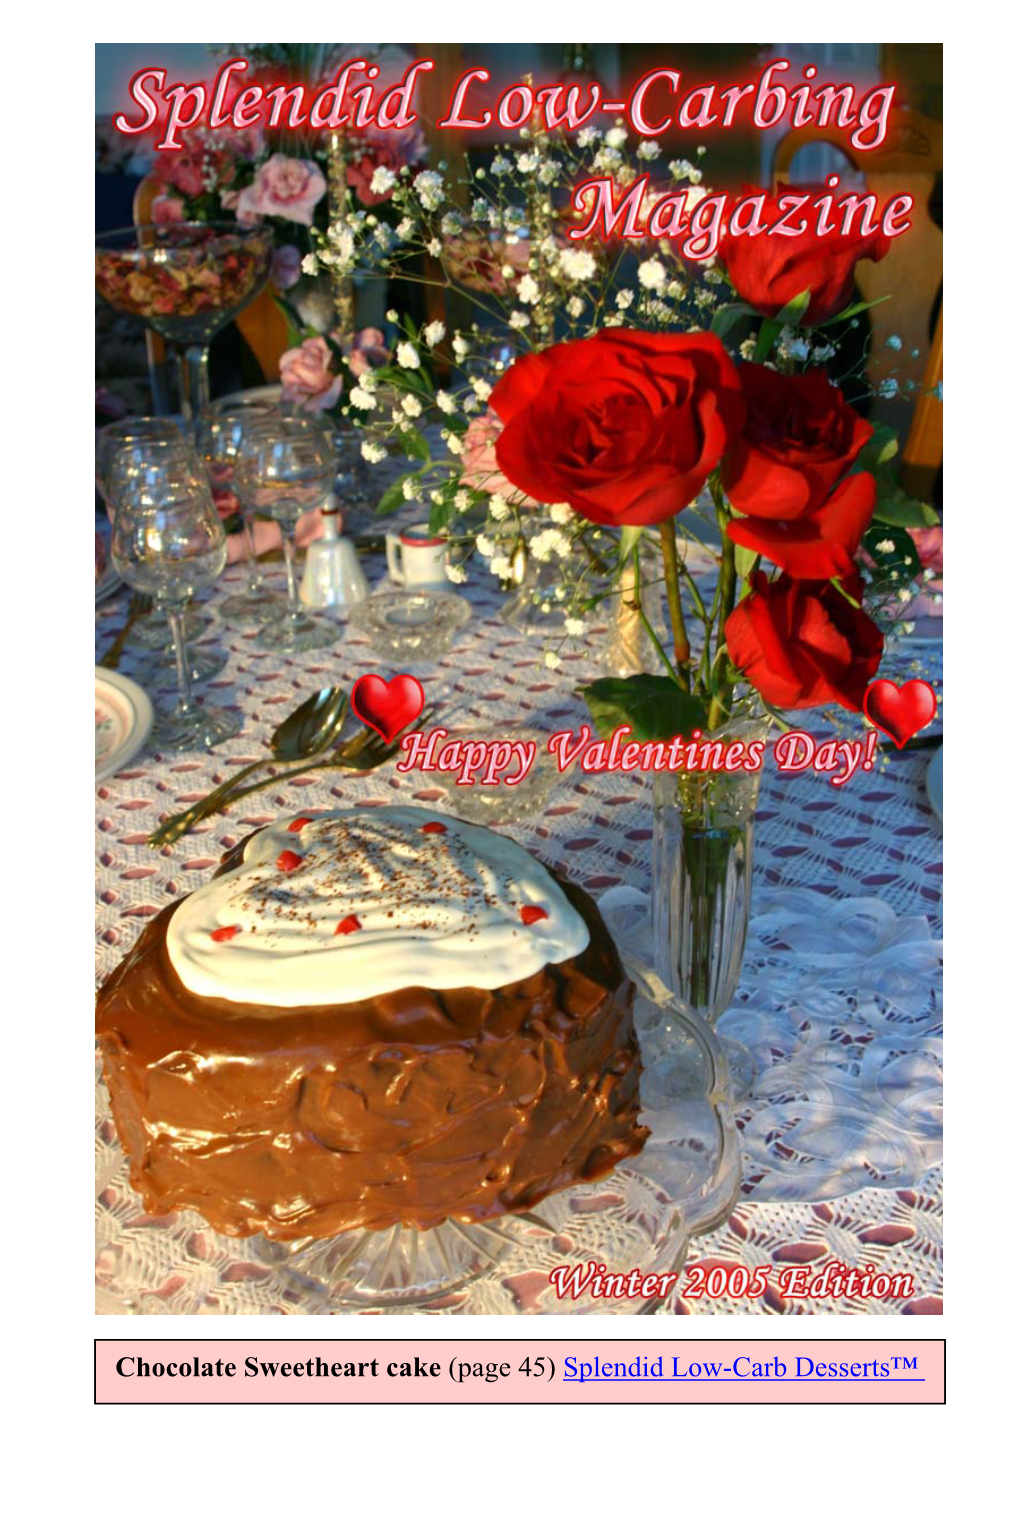 Splendid Low-Carbing™ Magazine (Winter-2005 Edition) Valentine’S Edition by Jennifer Eloff, Author of the “Splendid Low-Carbing™ Series”